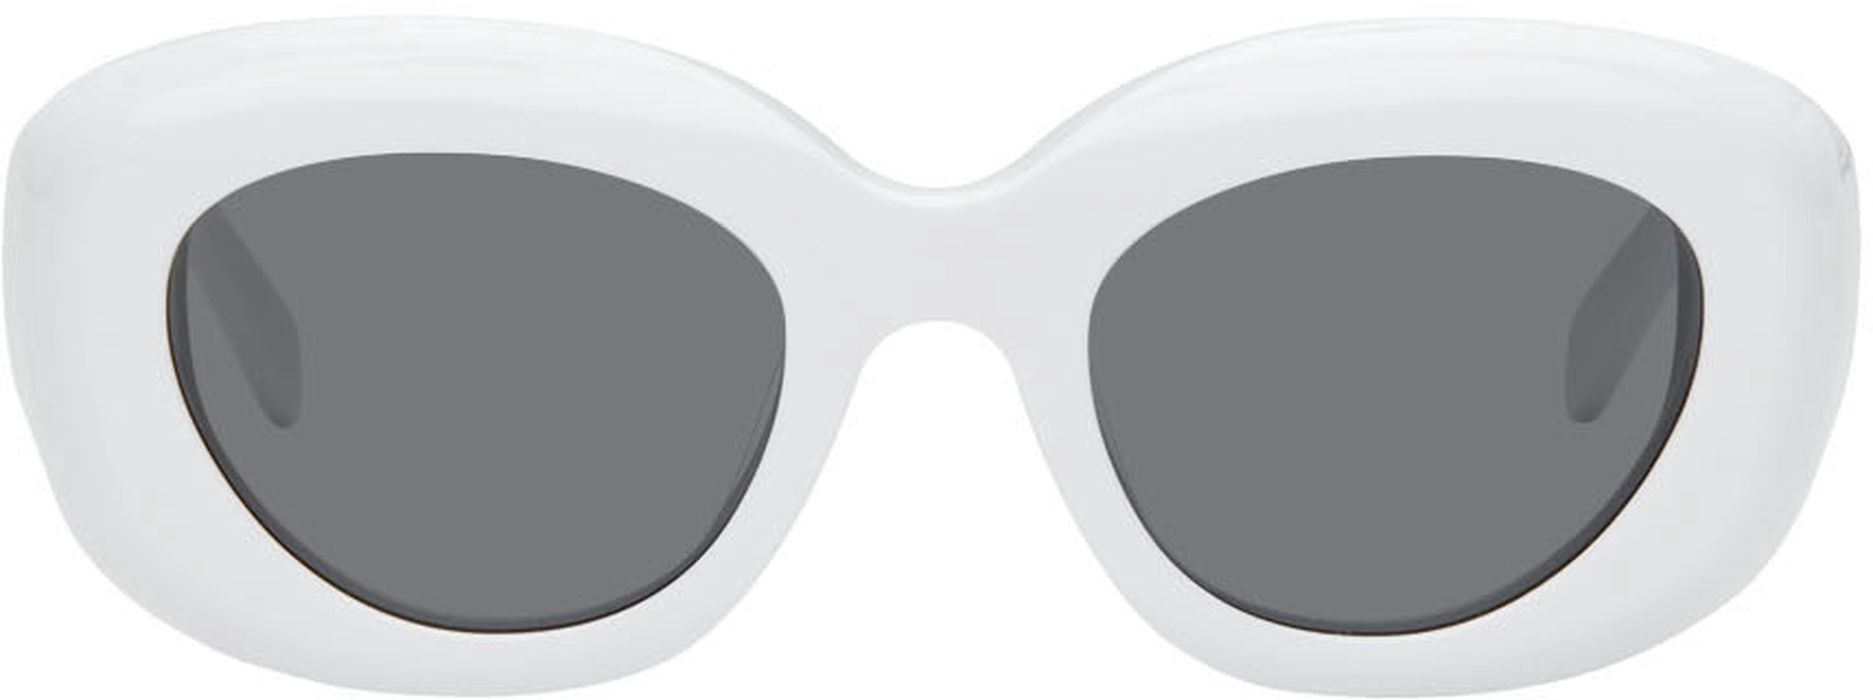 BONNIE CLYDE White Portal Sunglasses